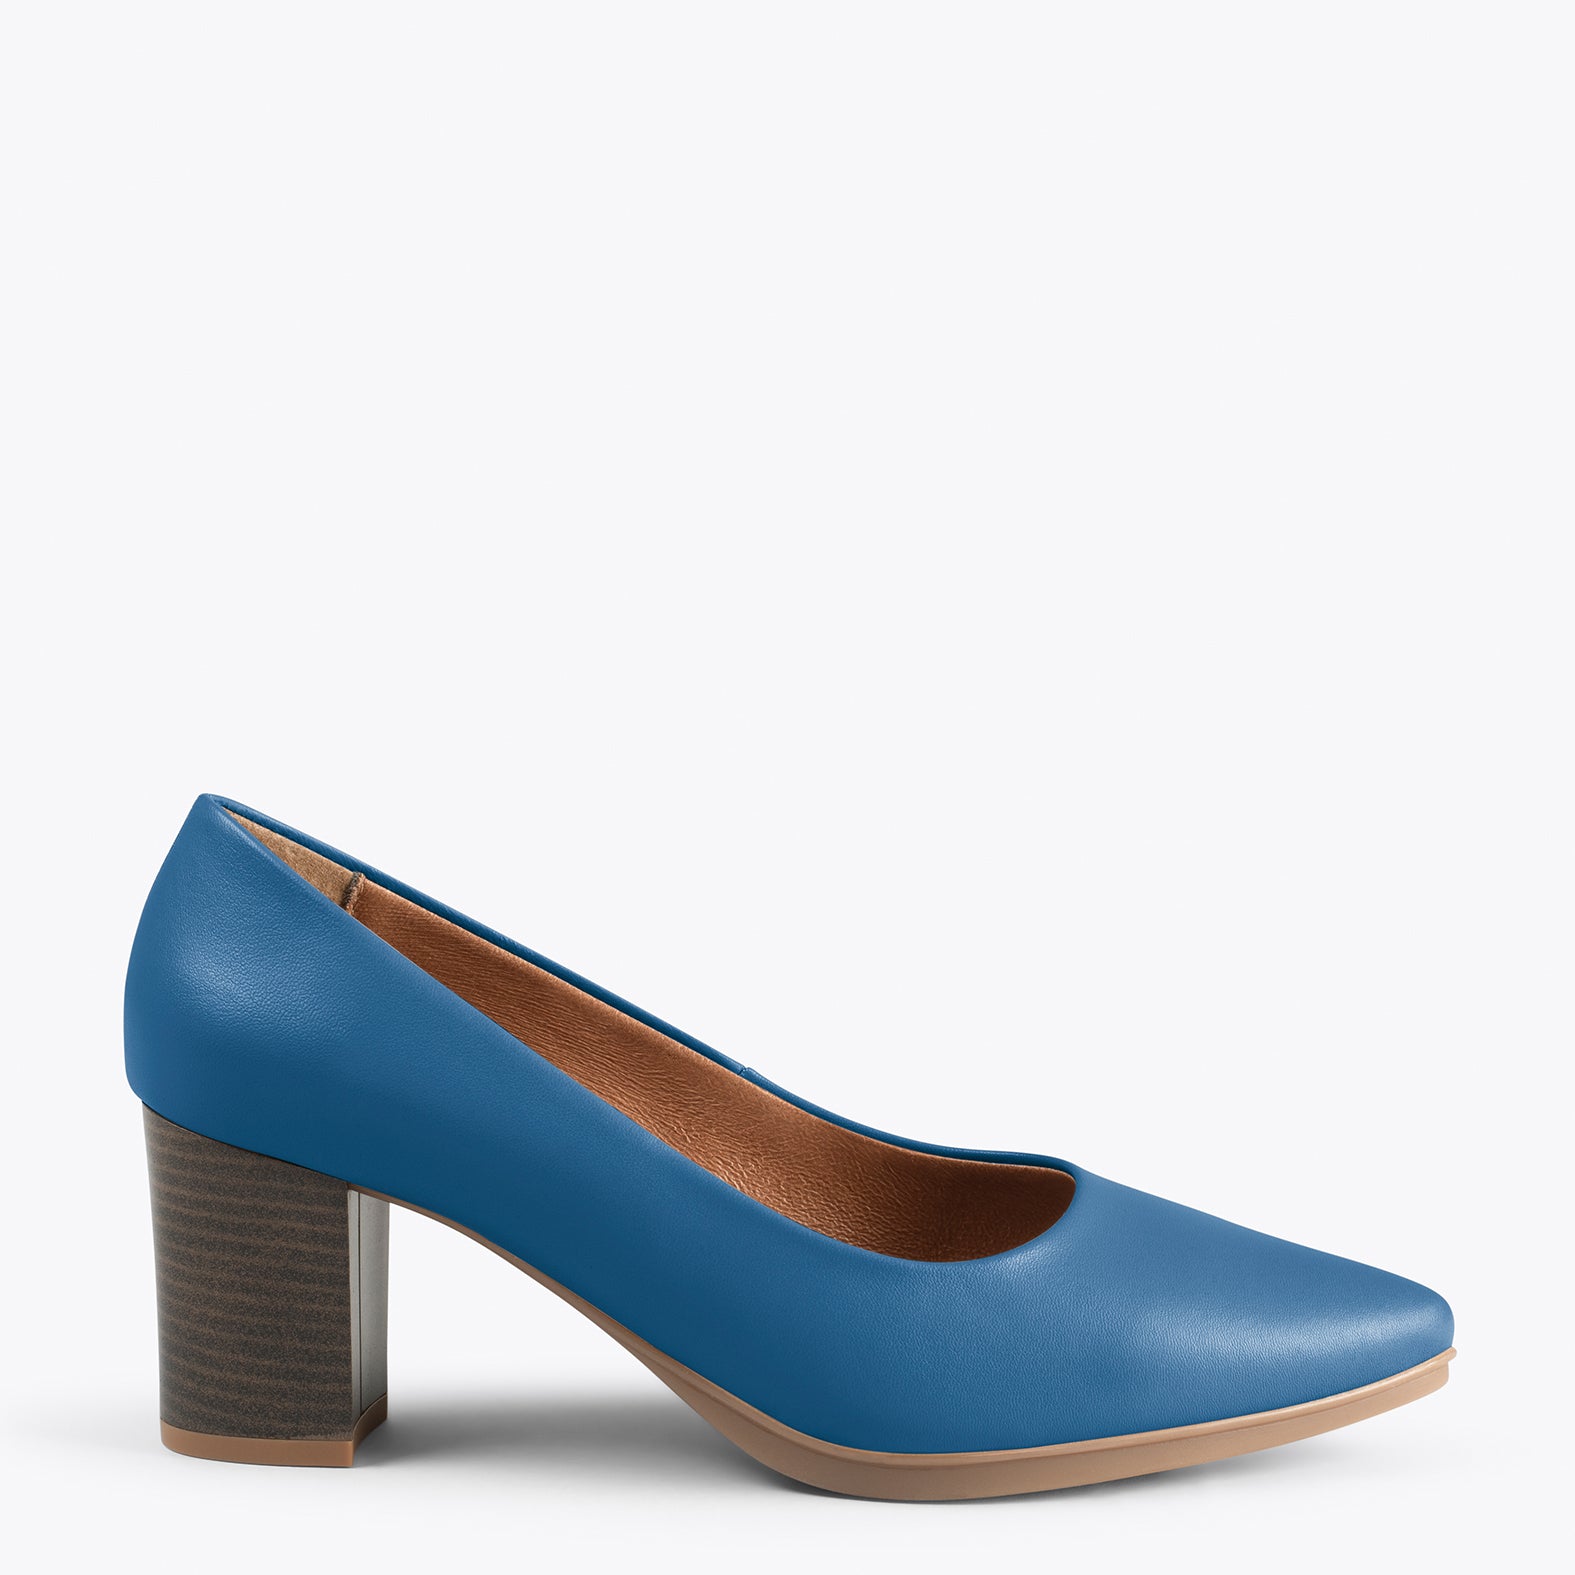 URBAN S SALON – BLUE nappa leather mid heels